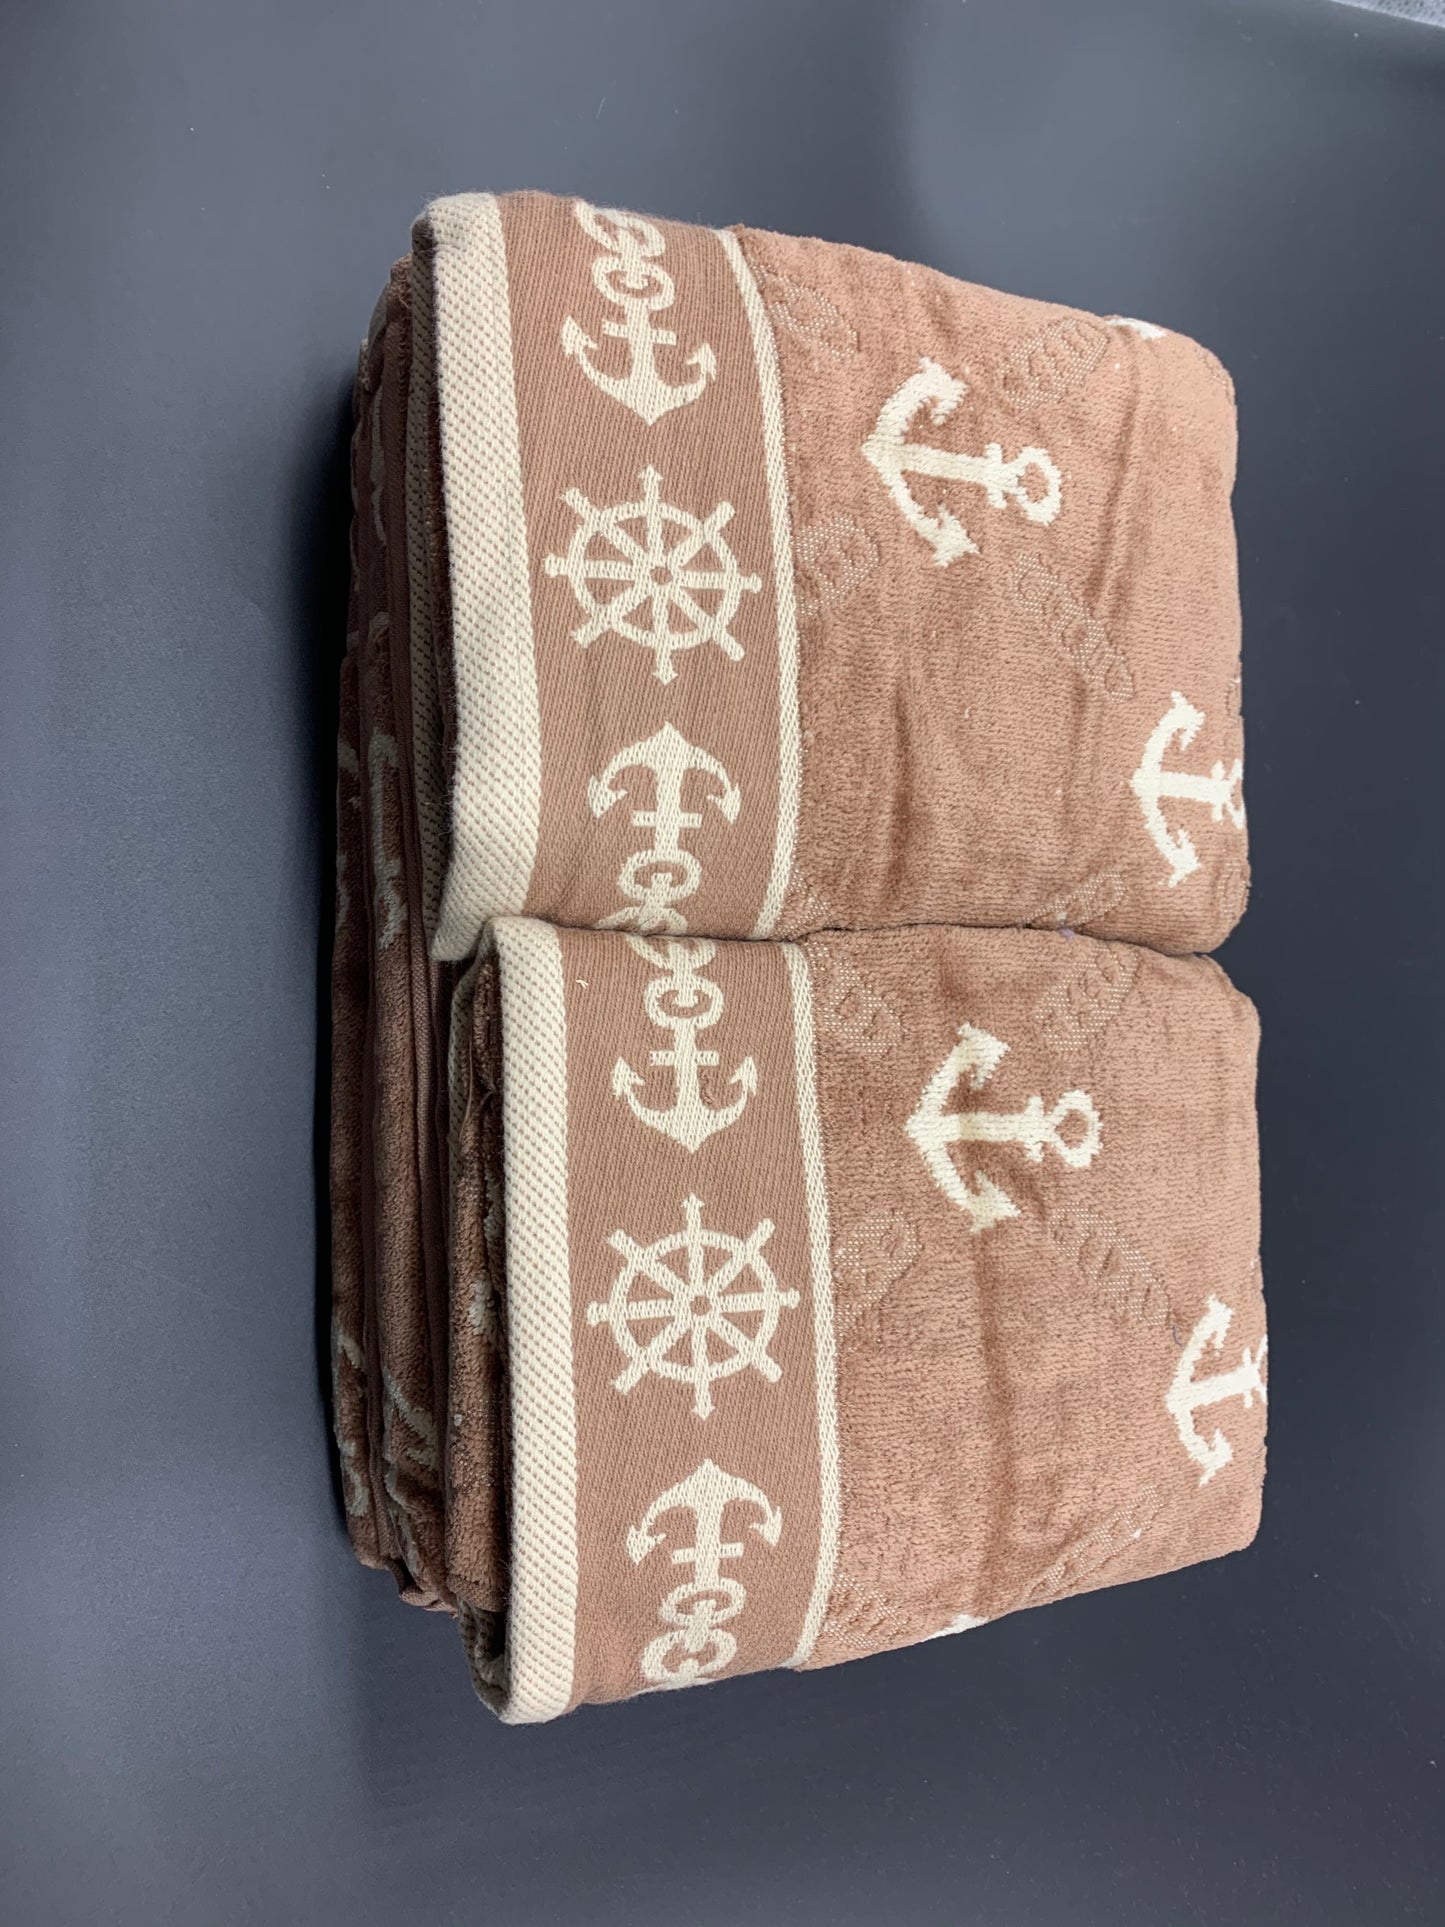 Anchor Bath Towel- 4 piece set